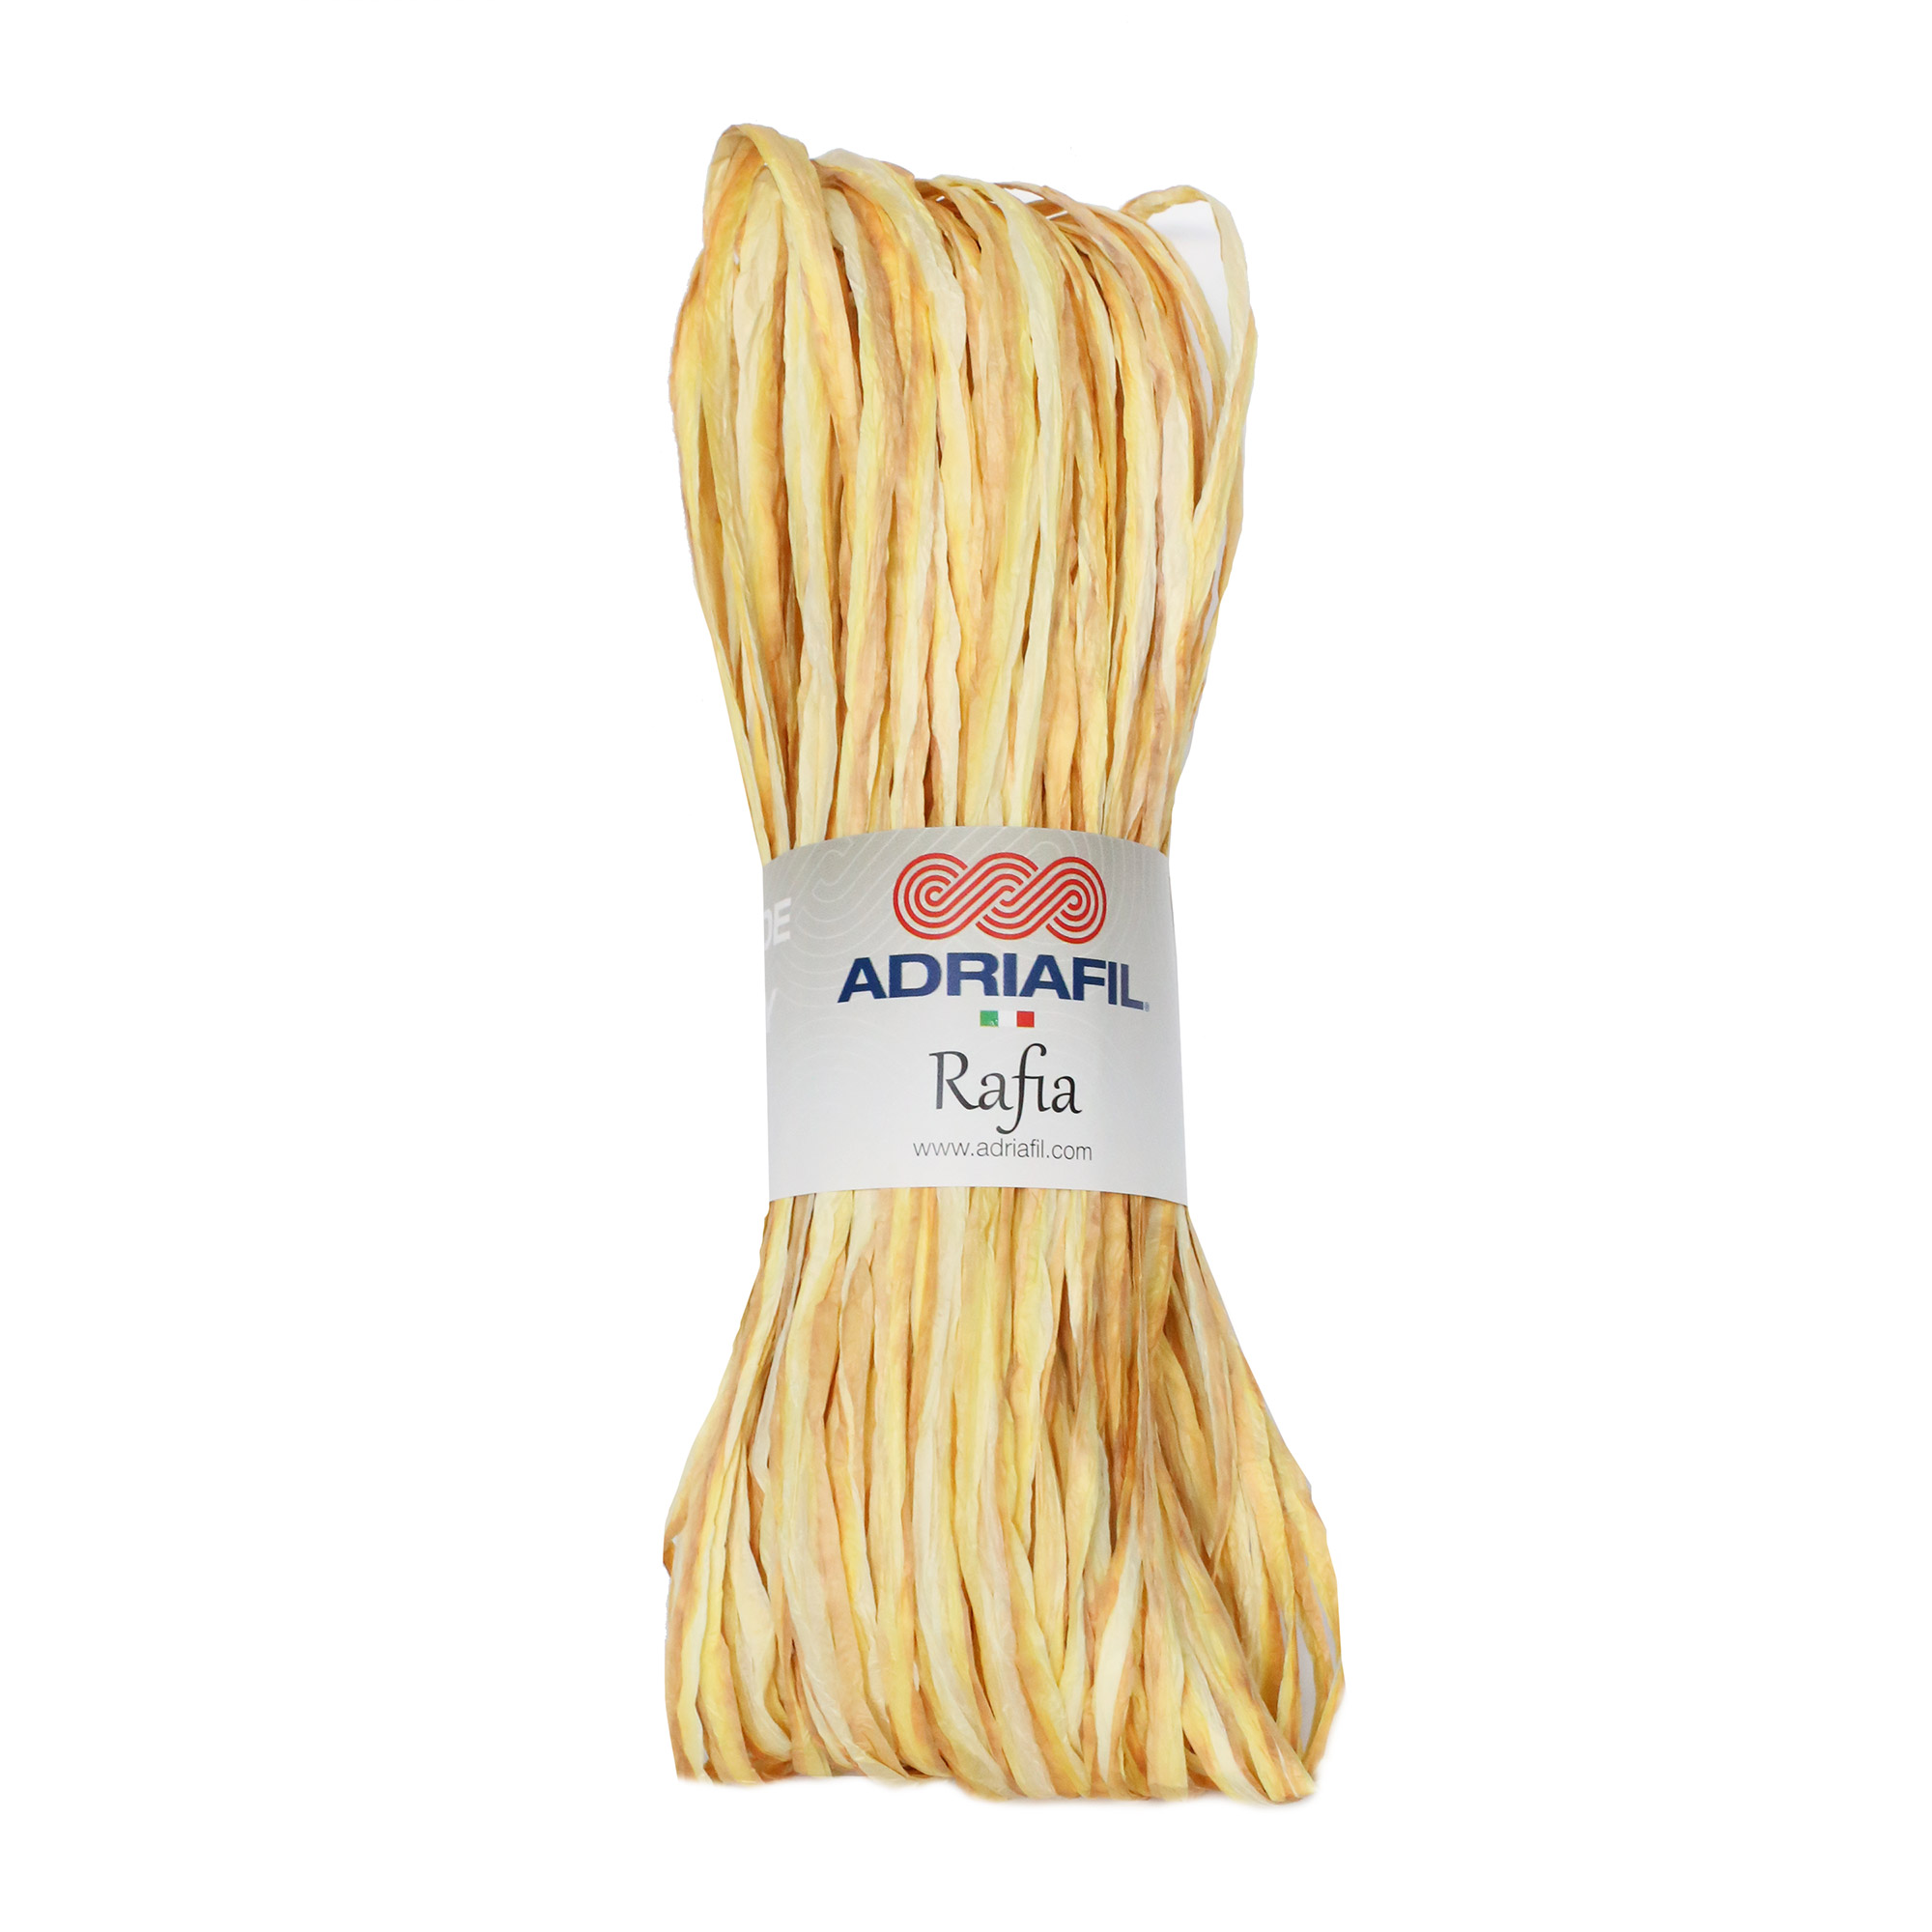 Rafia - Adriafil - 10 giallo sfumato